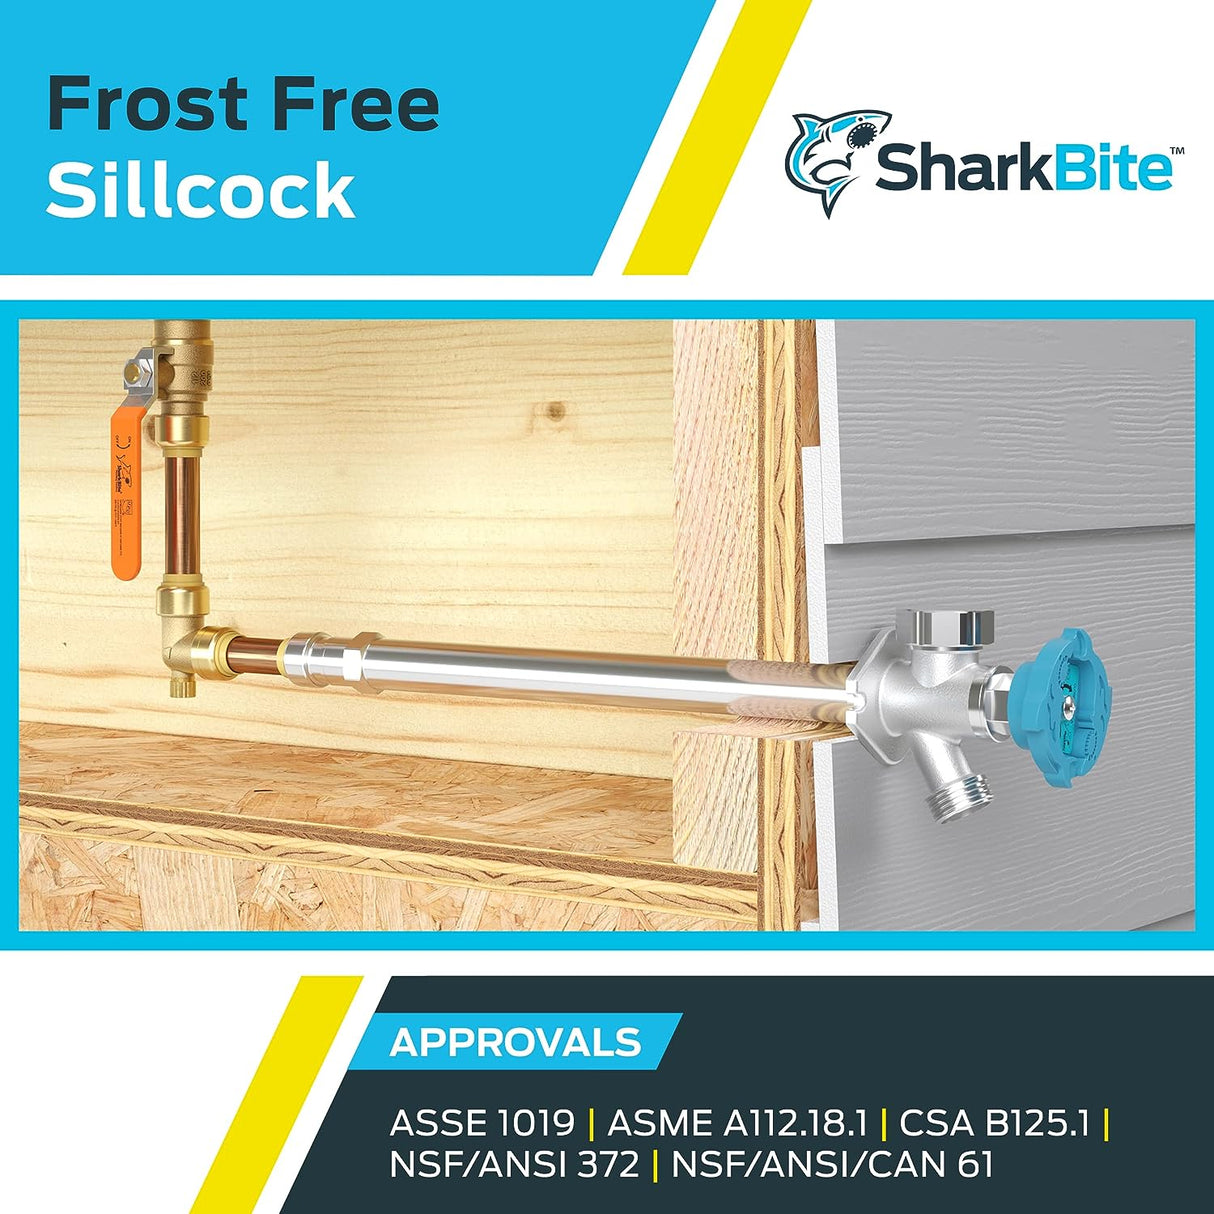 SharkBite SB Sillcock 1/2-in x 3/4-in MHT x 10-in Frost Free